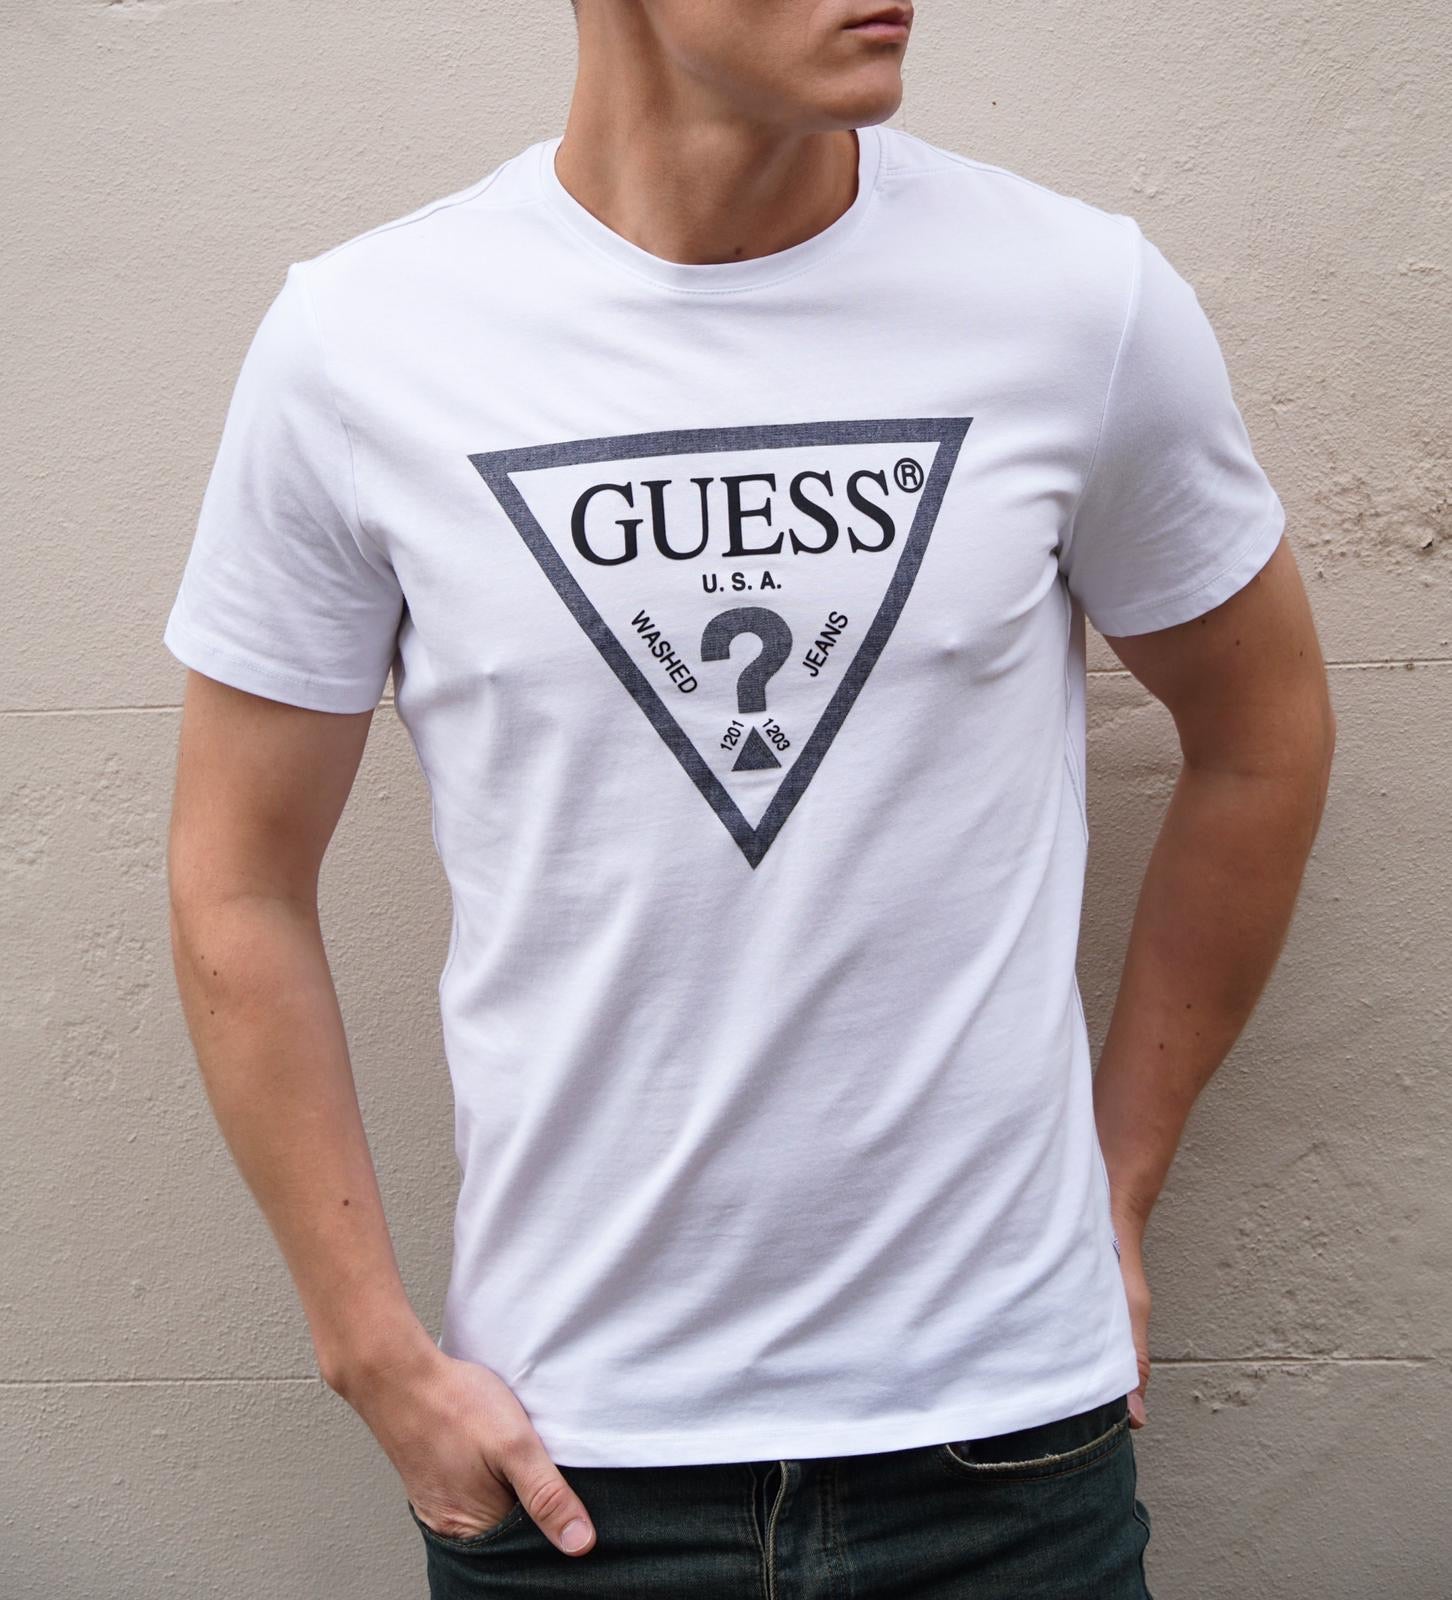 Guess tee shirt / tshirt / top, men's branded designer – System F